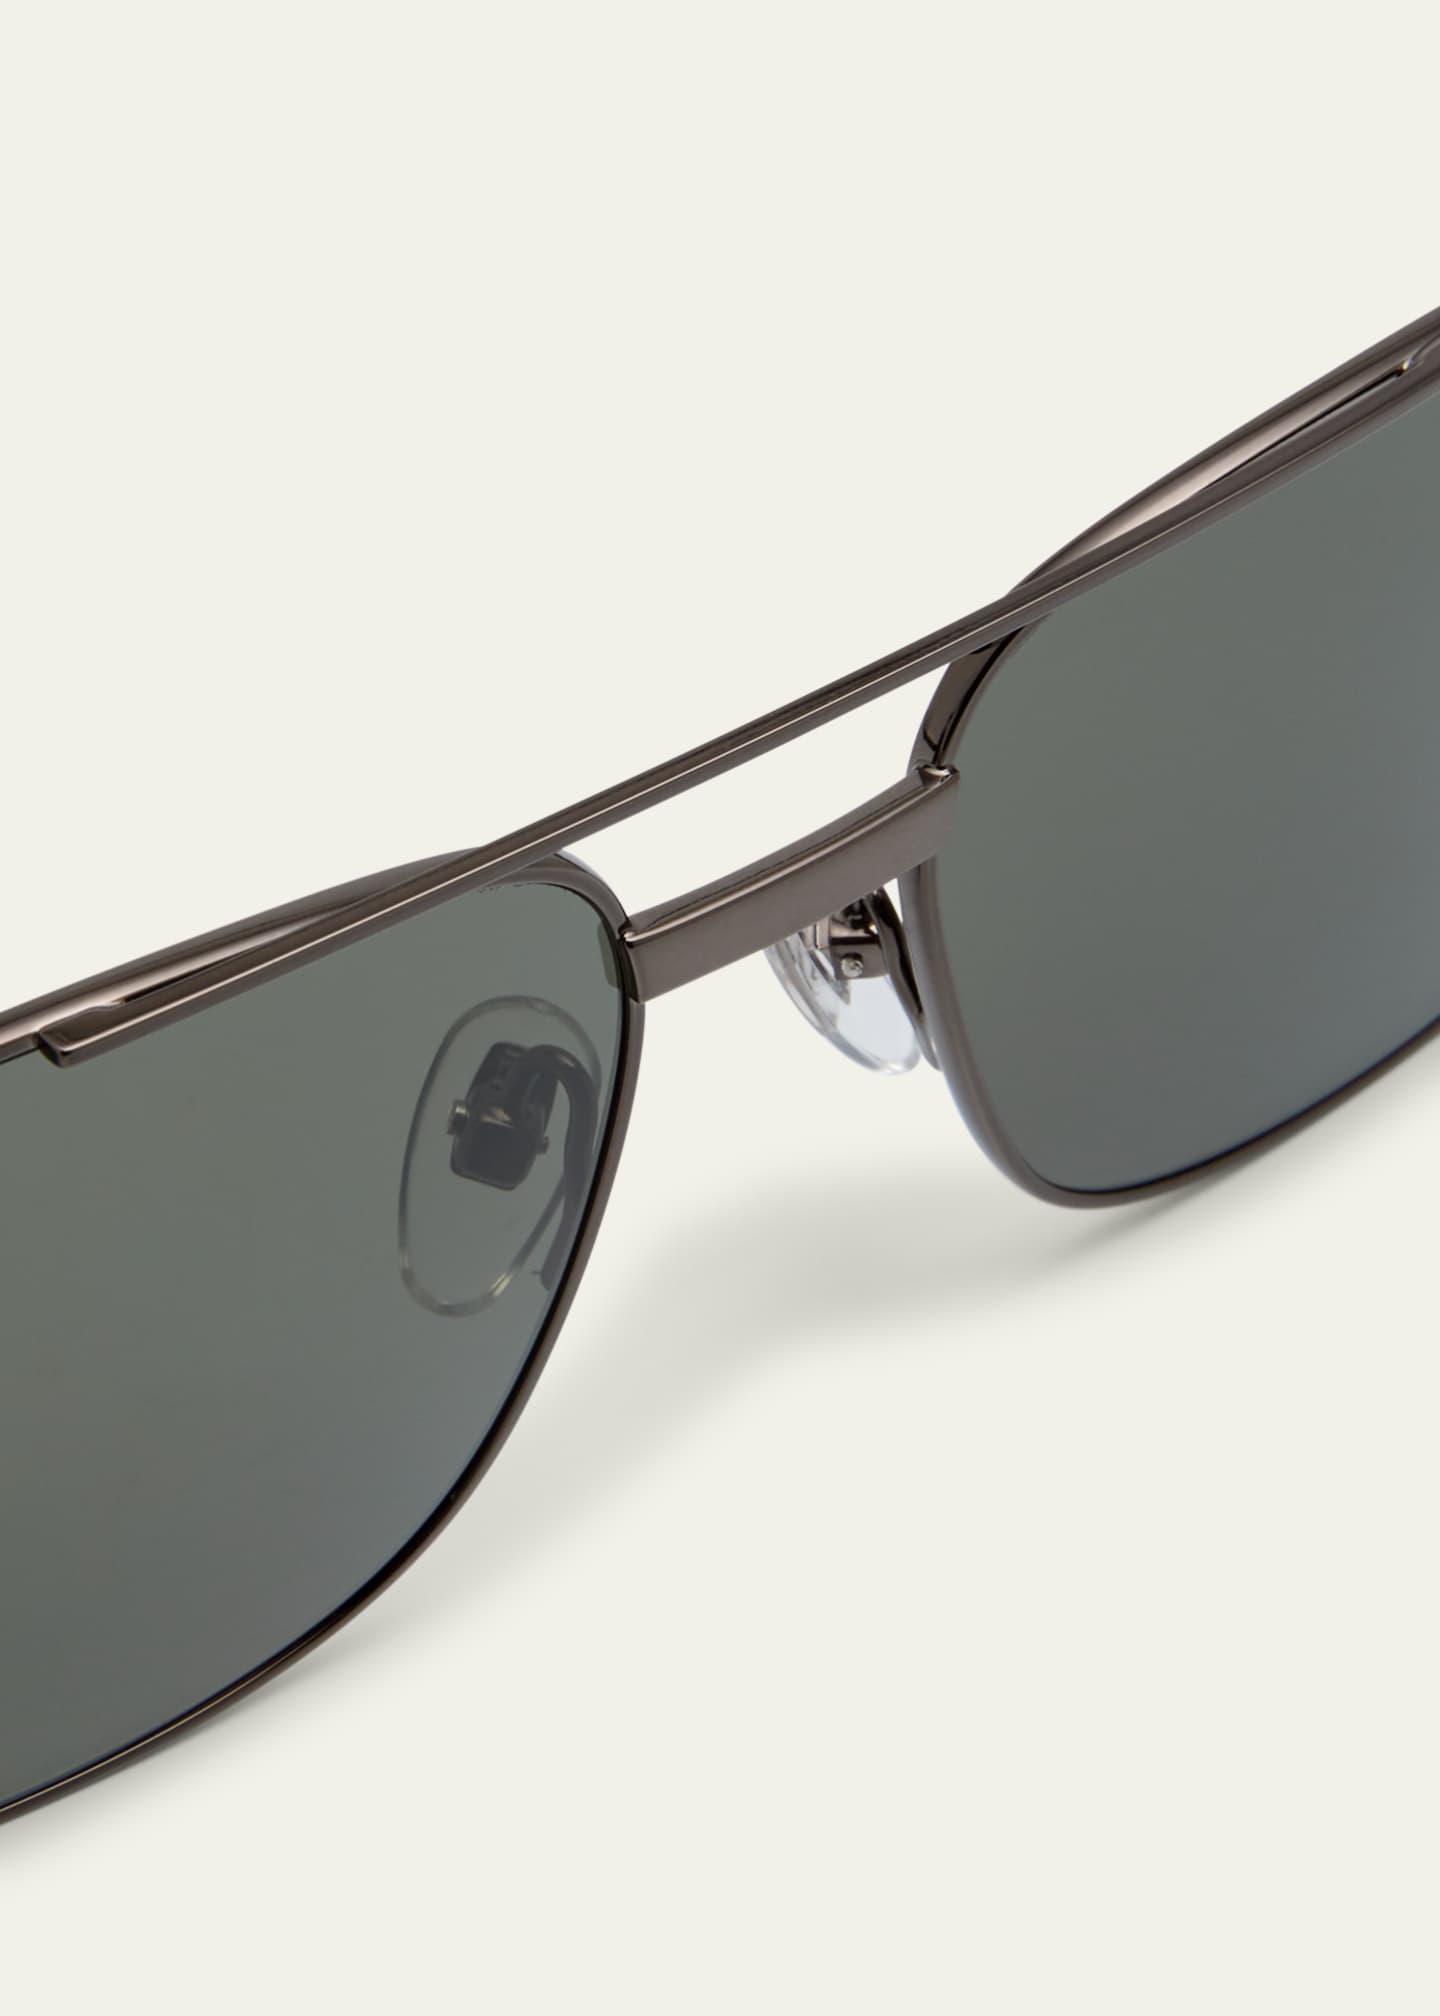 Gucci Gray Rectangular Sunglasses.